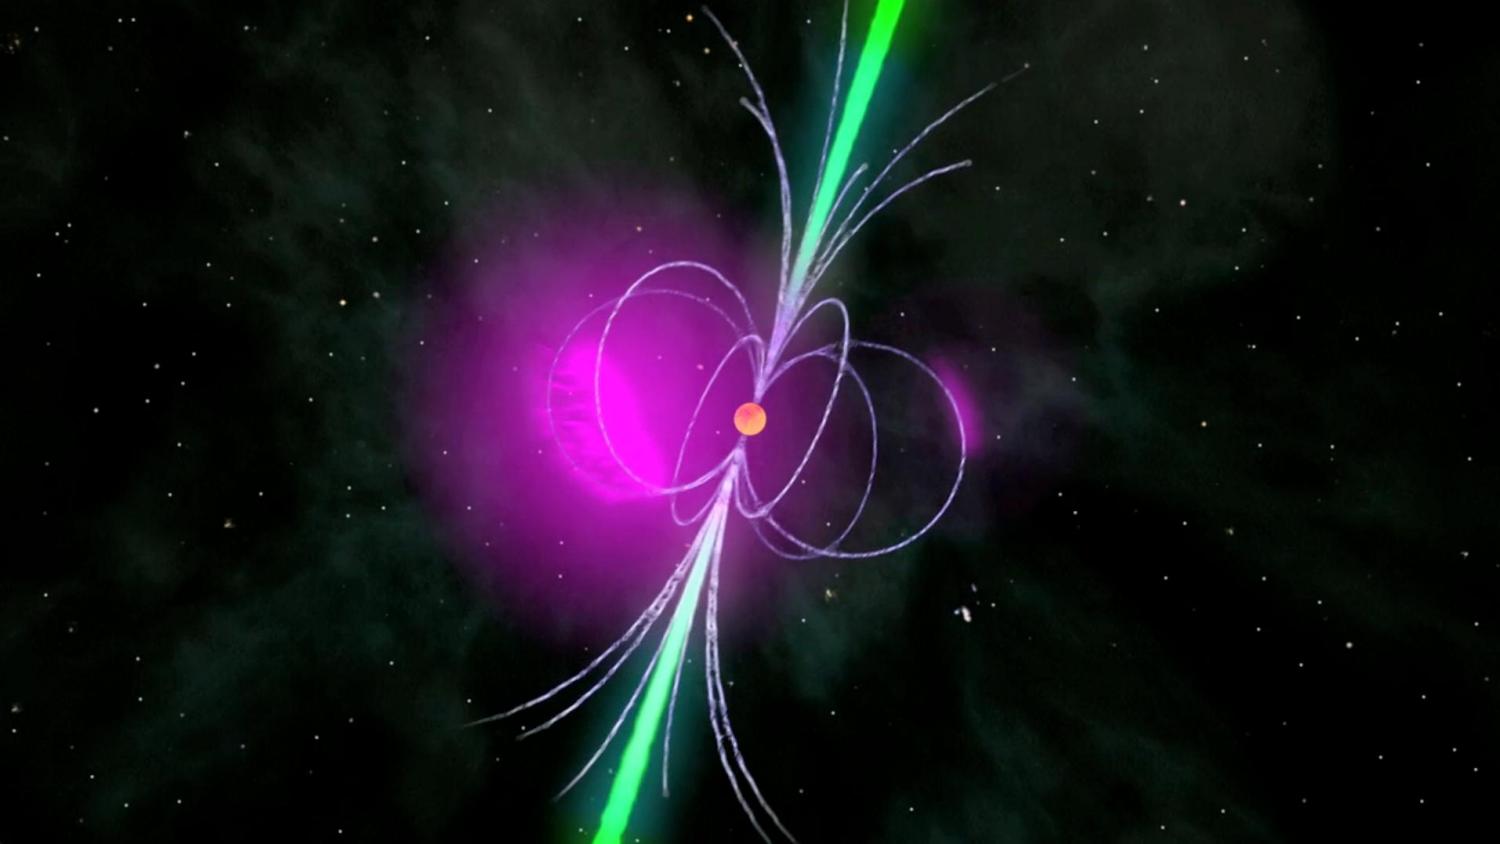 http://www.media.inaf.it/wp-content/uploads/2018/02/pulsar_illustration-1.jpg